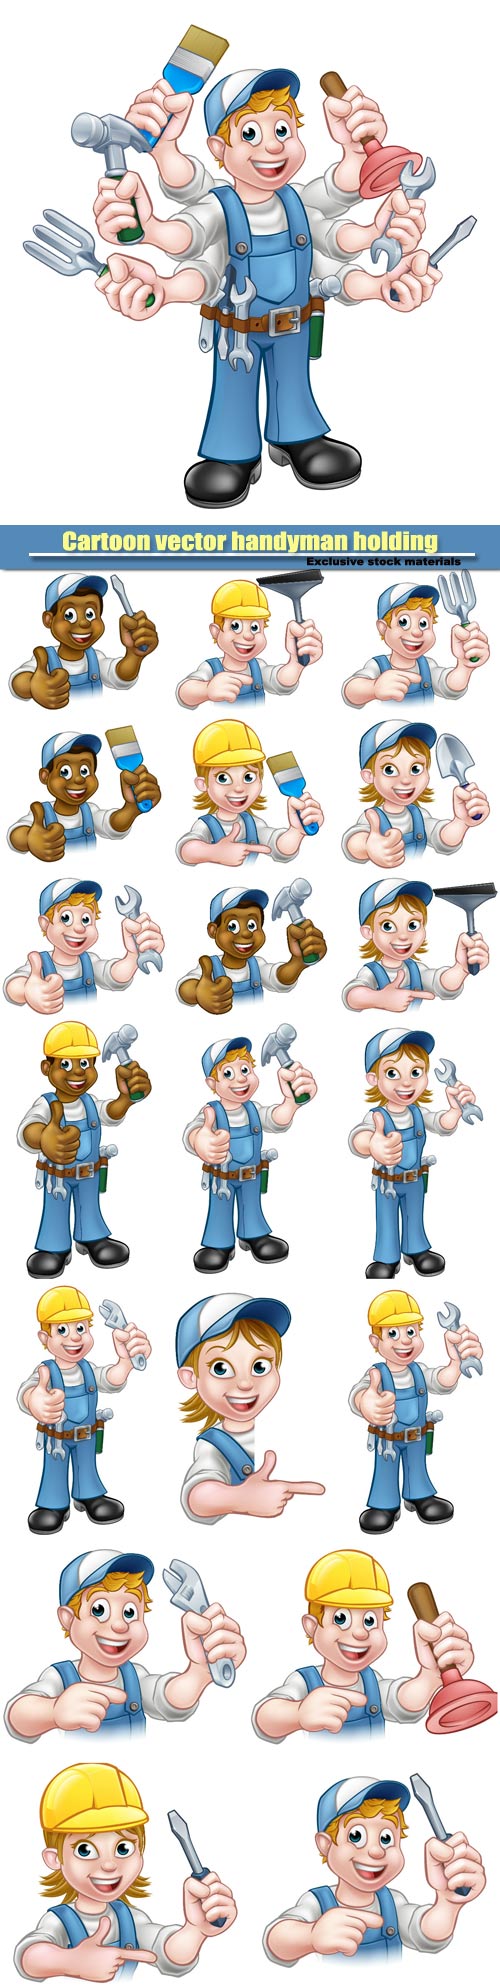 Cartoon vector handyman holding lots of tools